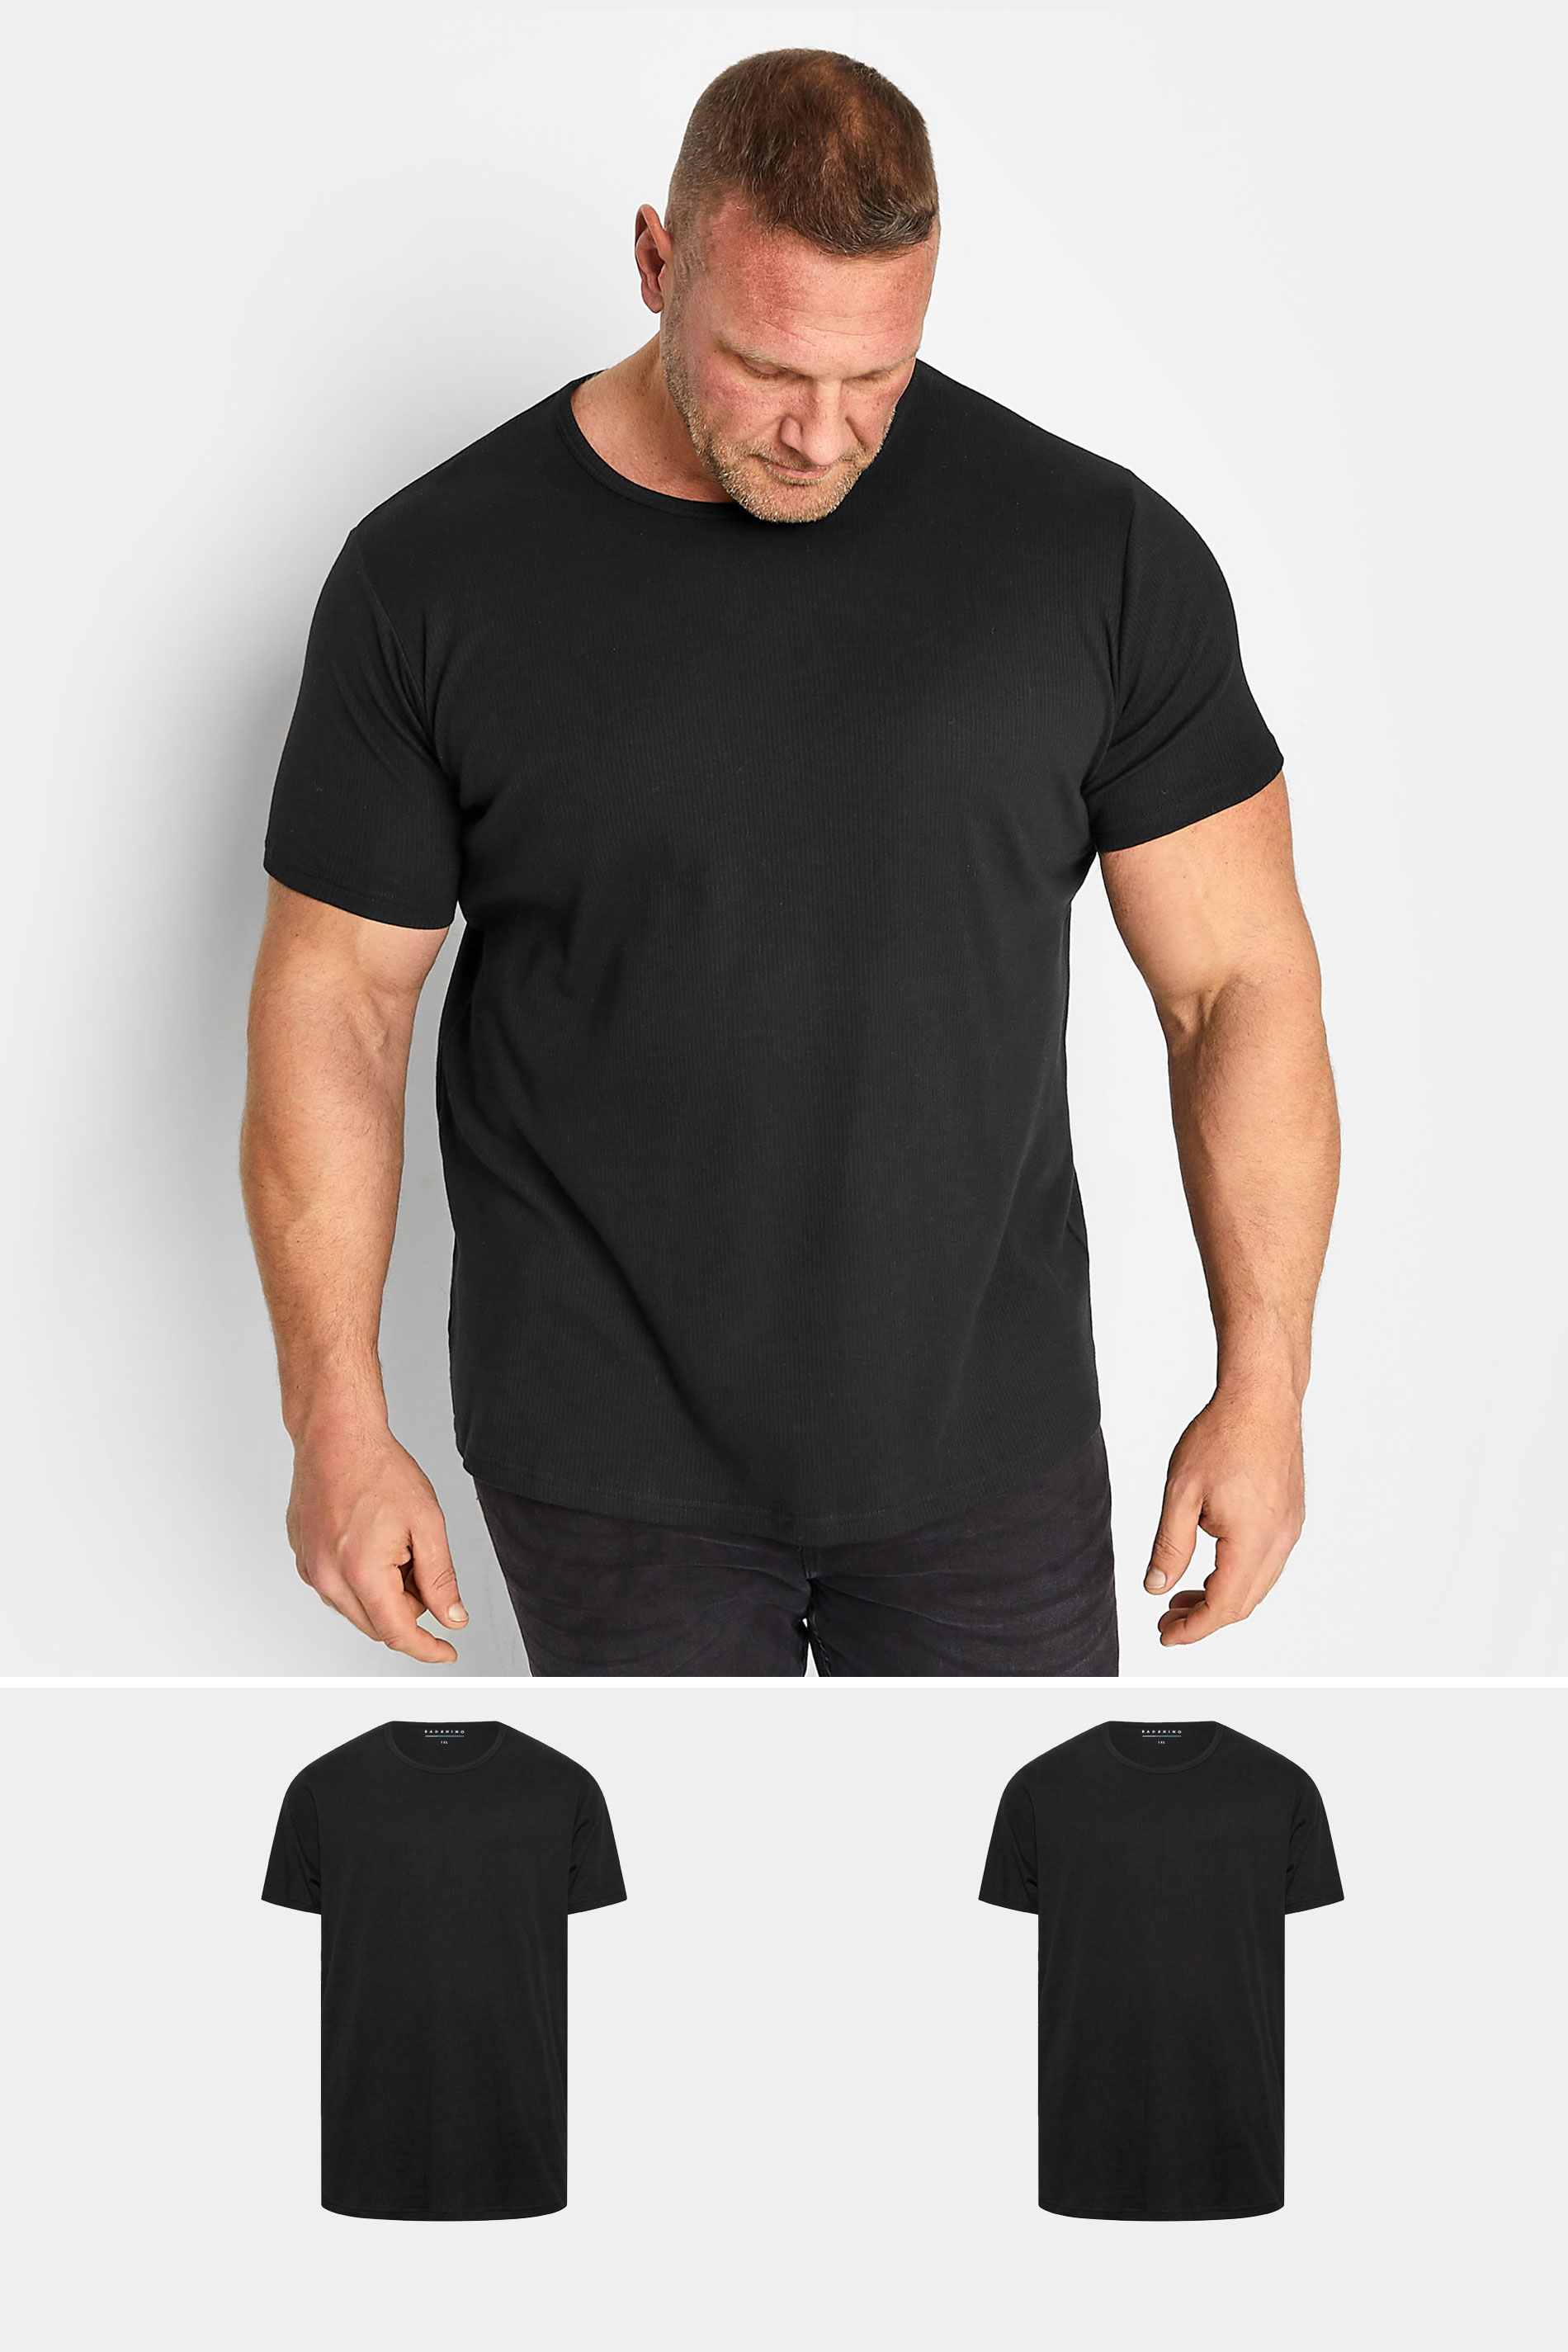 BadRhino Big & Tall 2 PACK Black Thermal T-Shirts | BadRhino 1